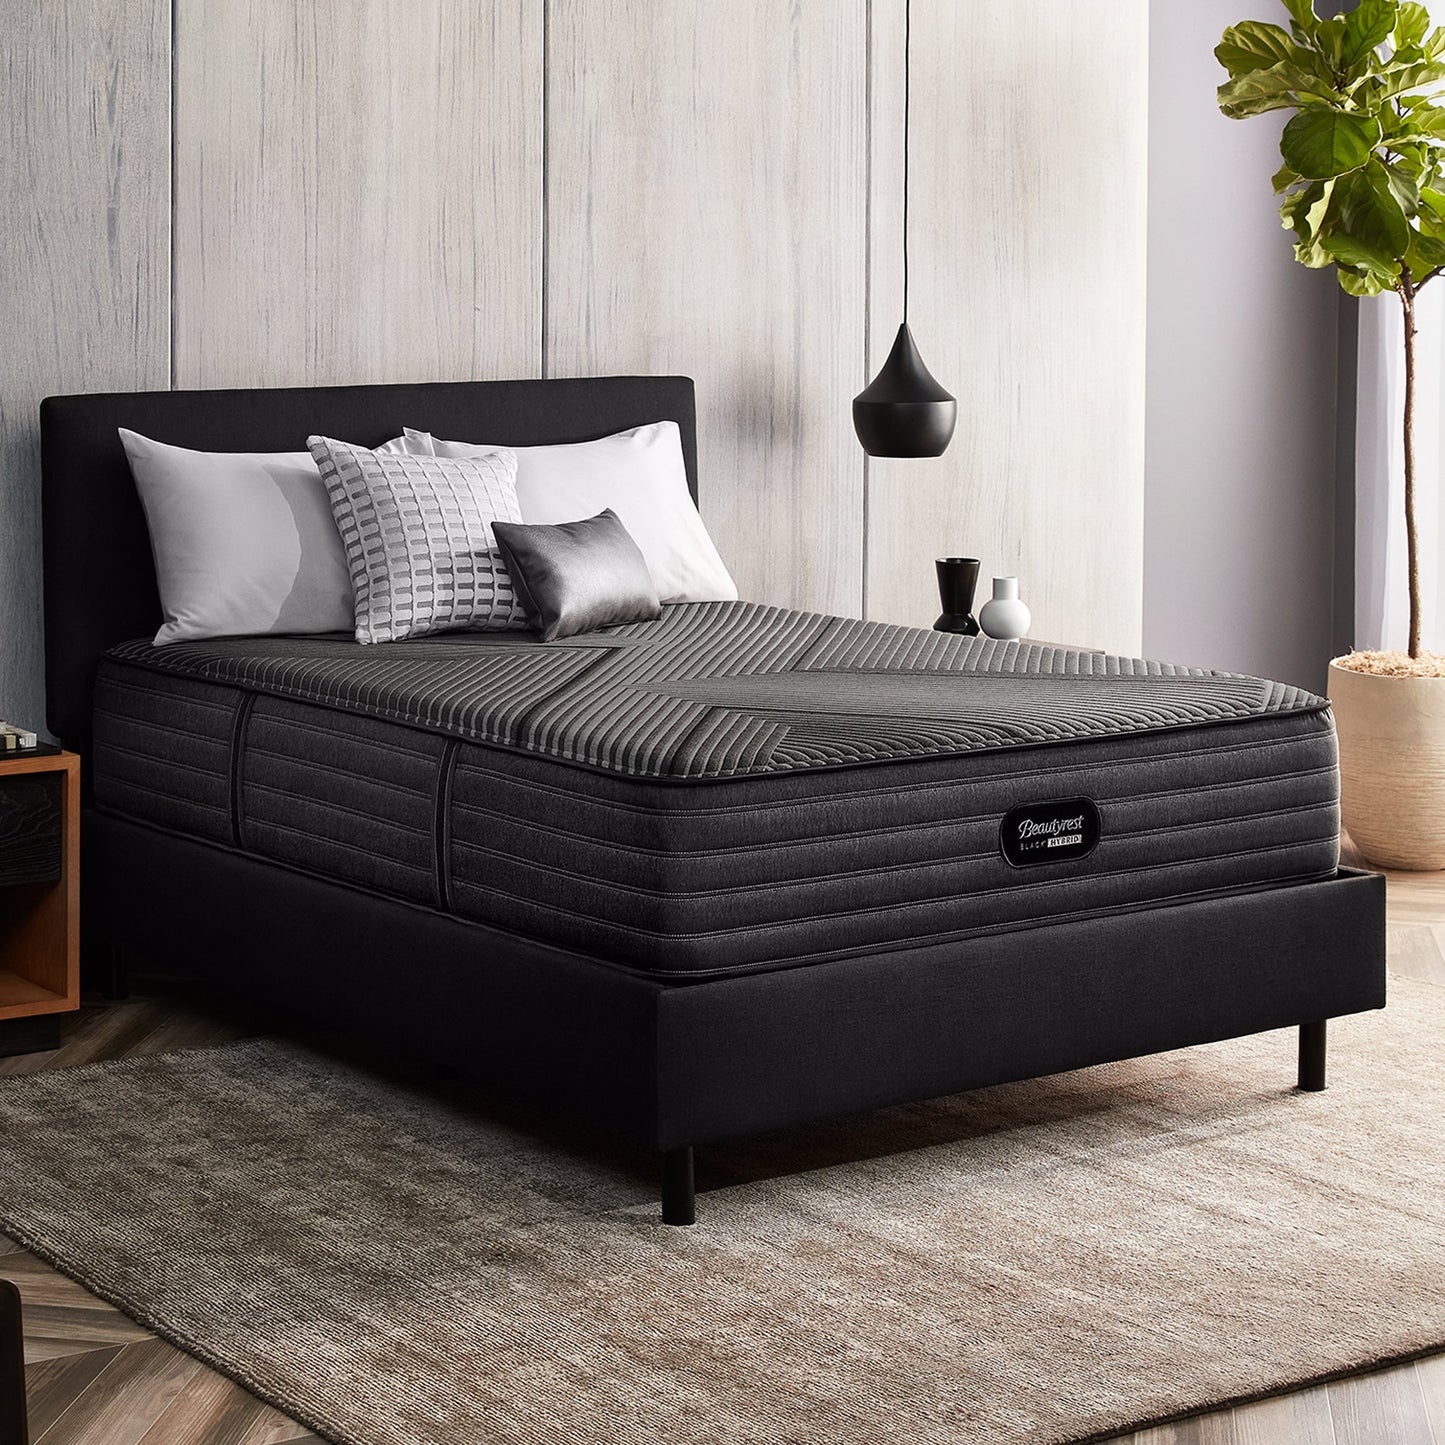 Beautyrest Black Hybrid L-Class Medium Mattress On Bed Frame In Bedroom